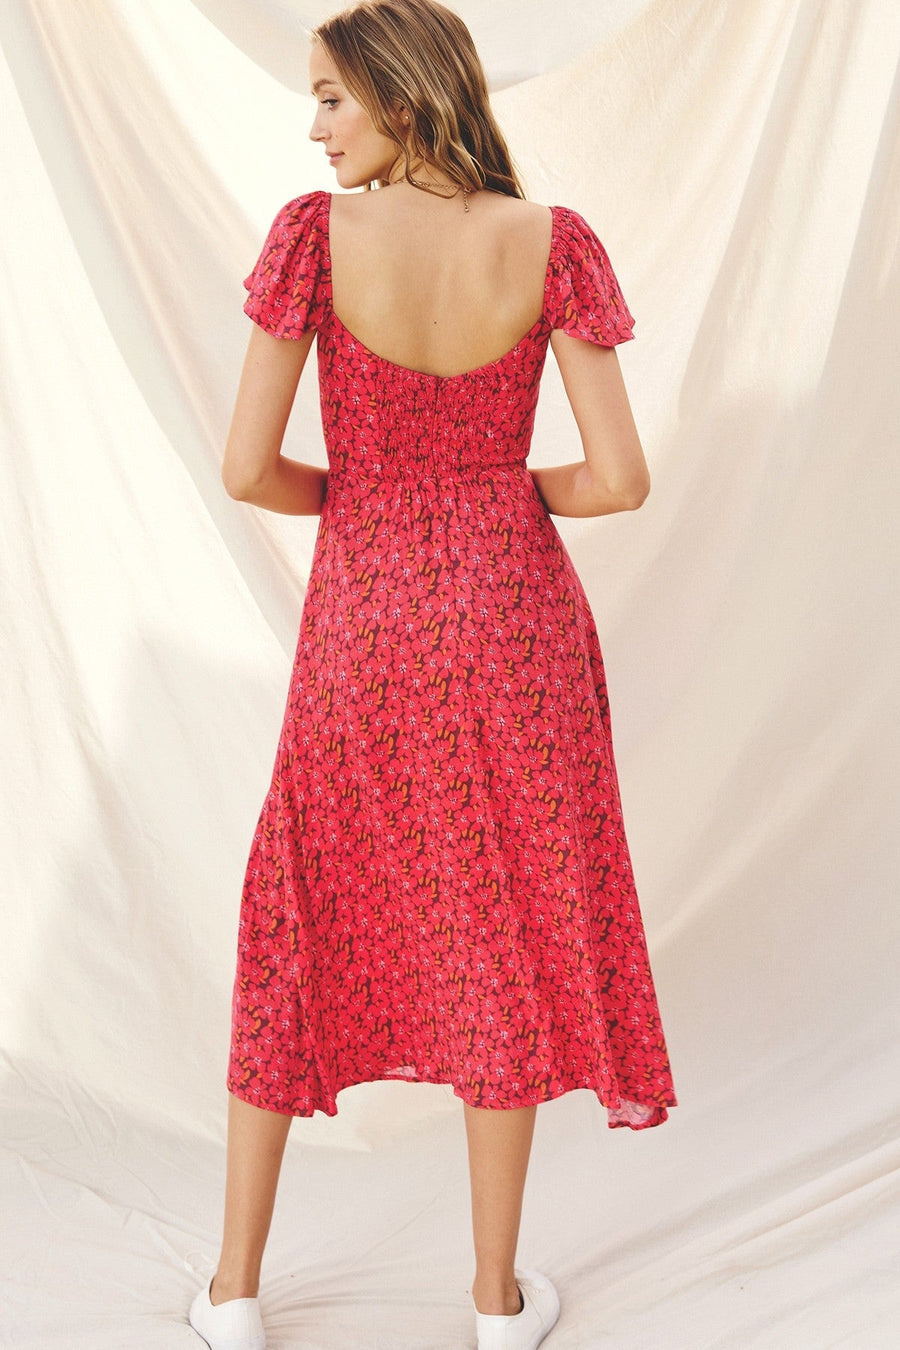 Pinkberry Maxi Dress General Dress Forum 